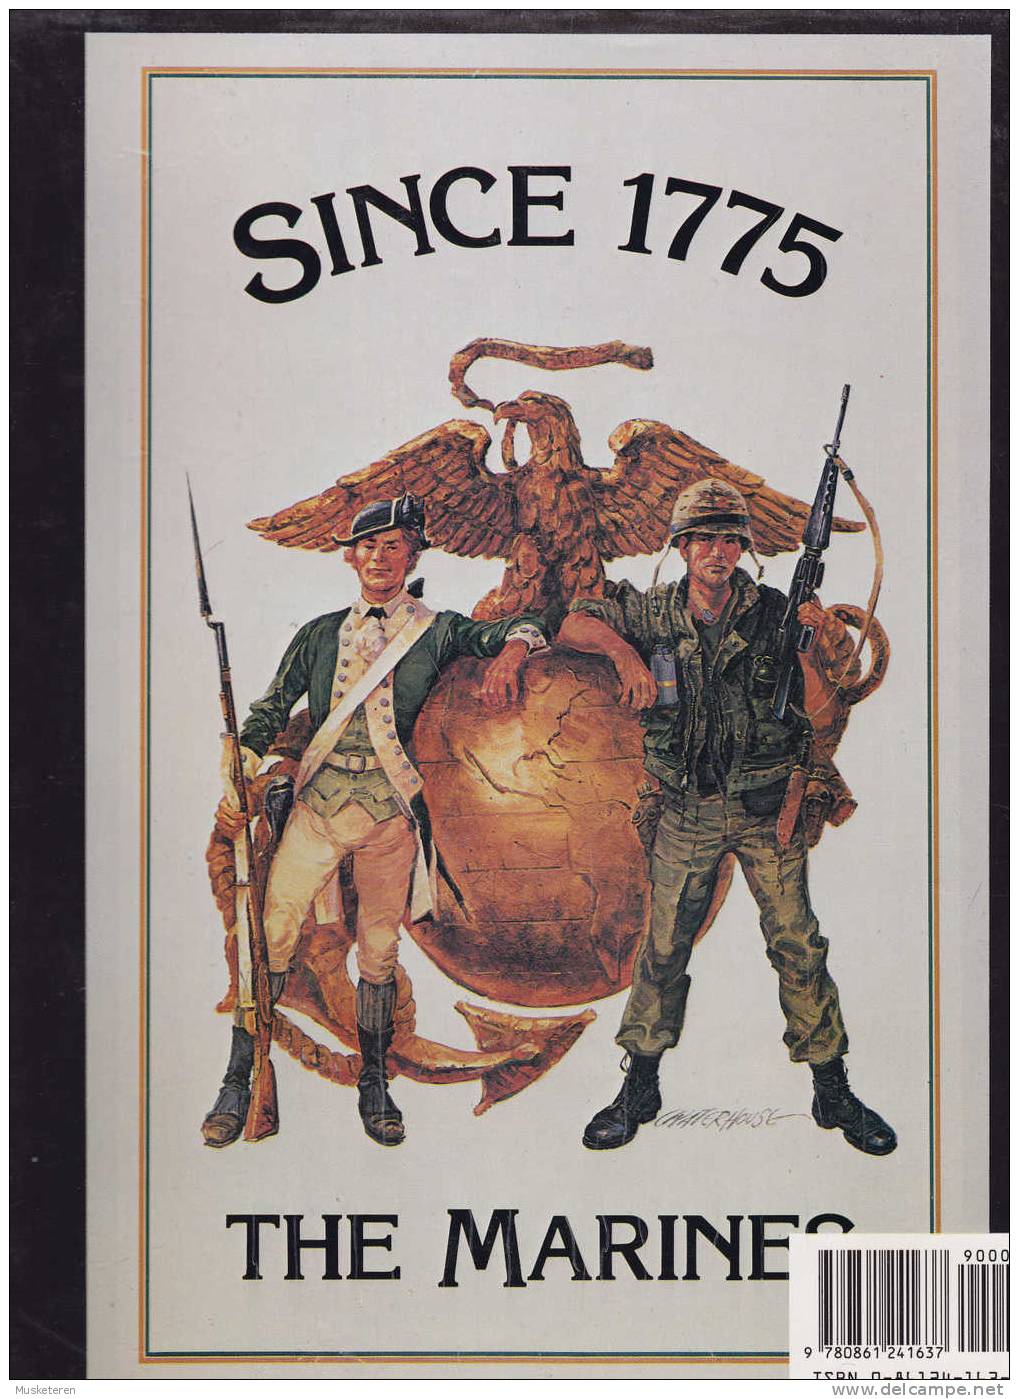 History Of The US MARINES By Jack Murphy - Fuerzas Armadas Americanas